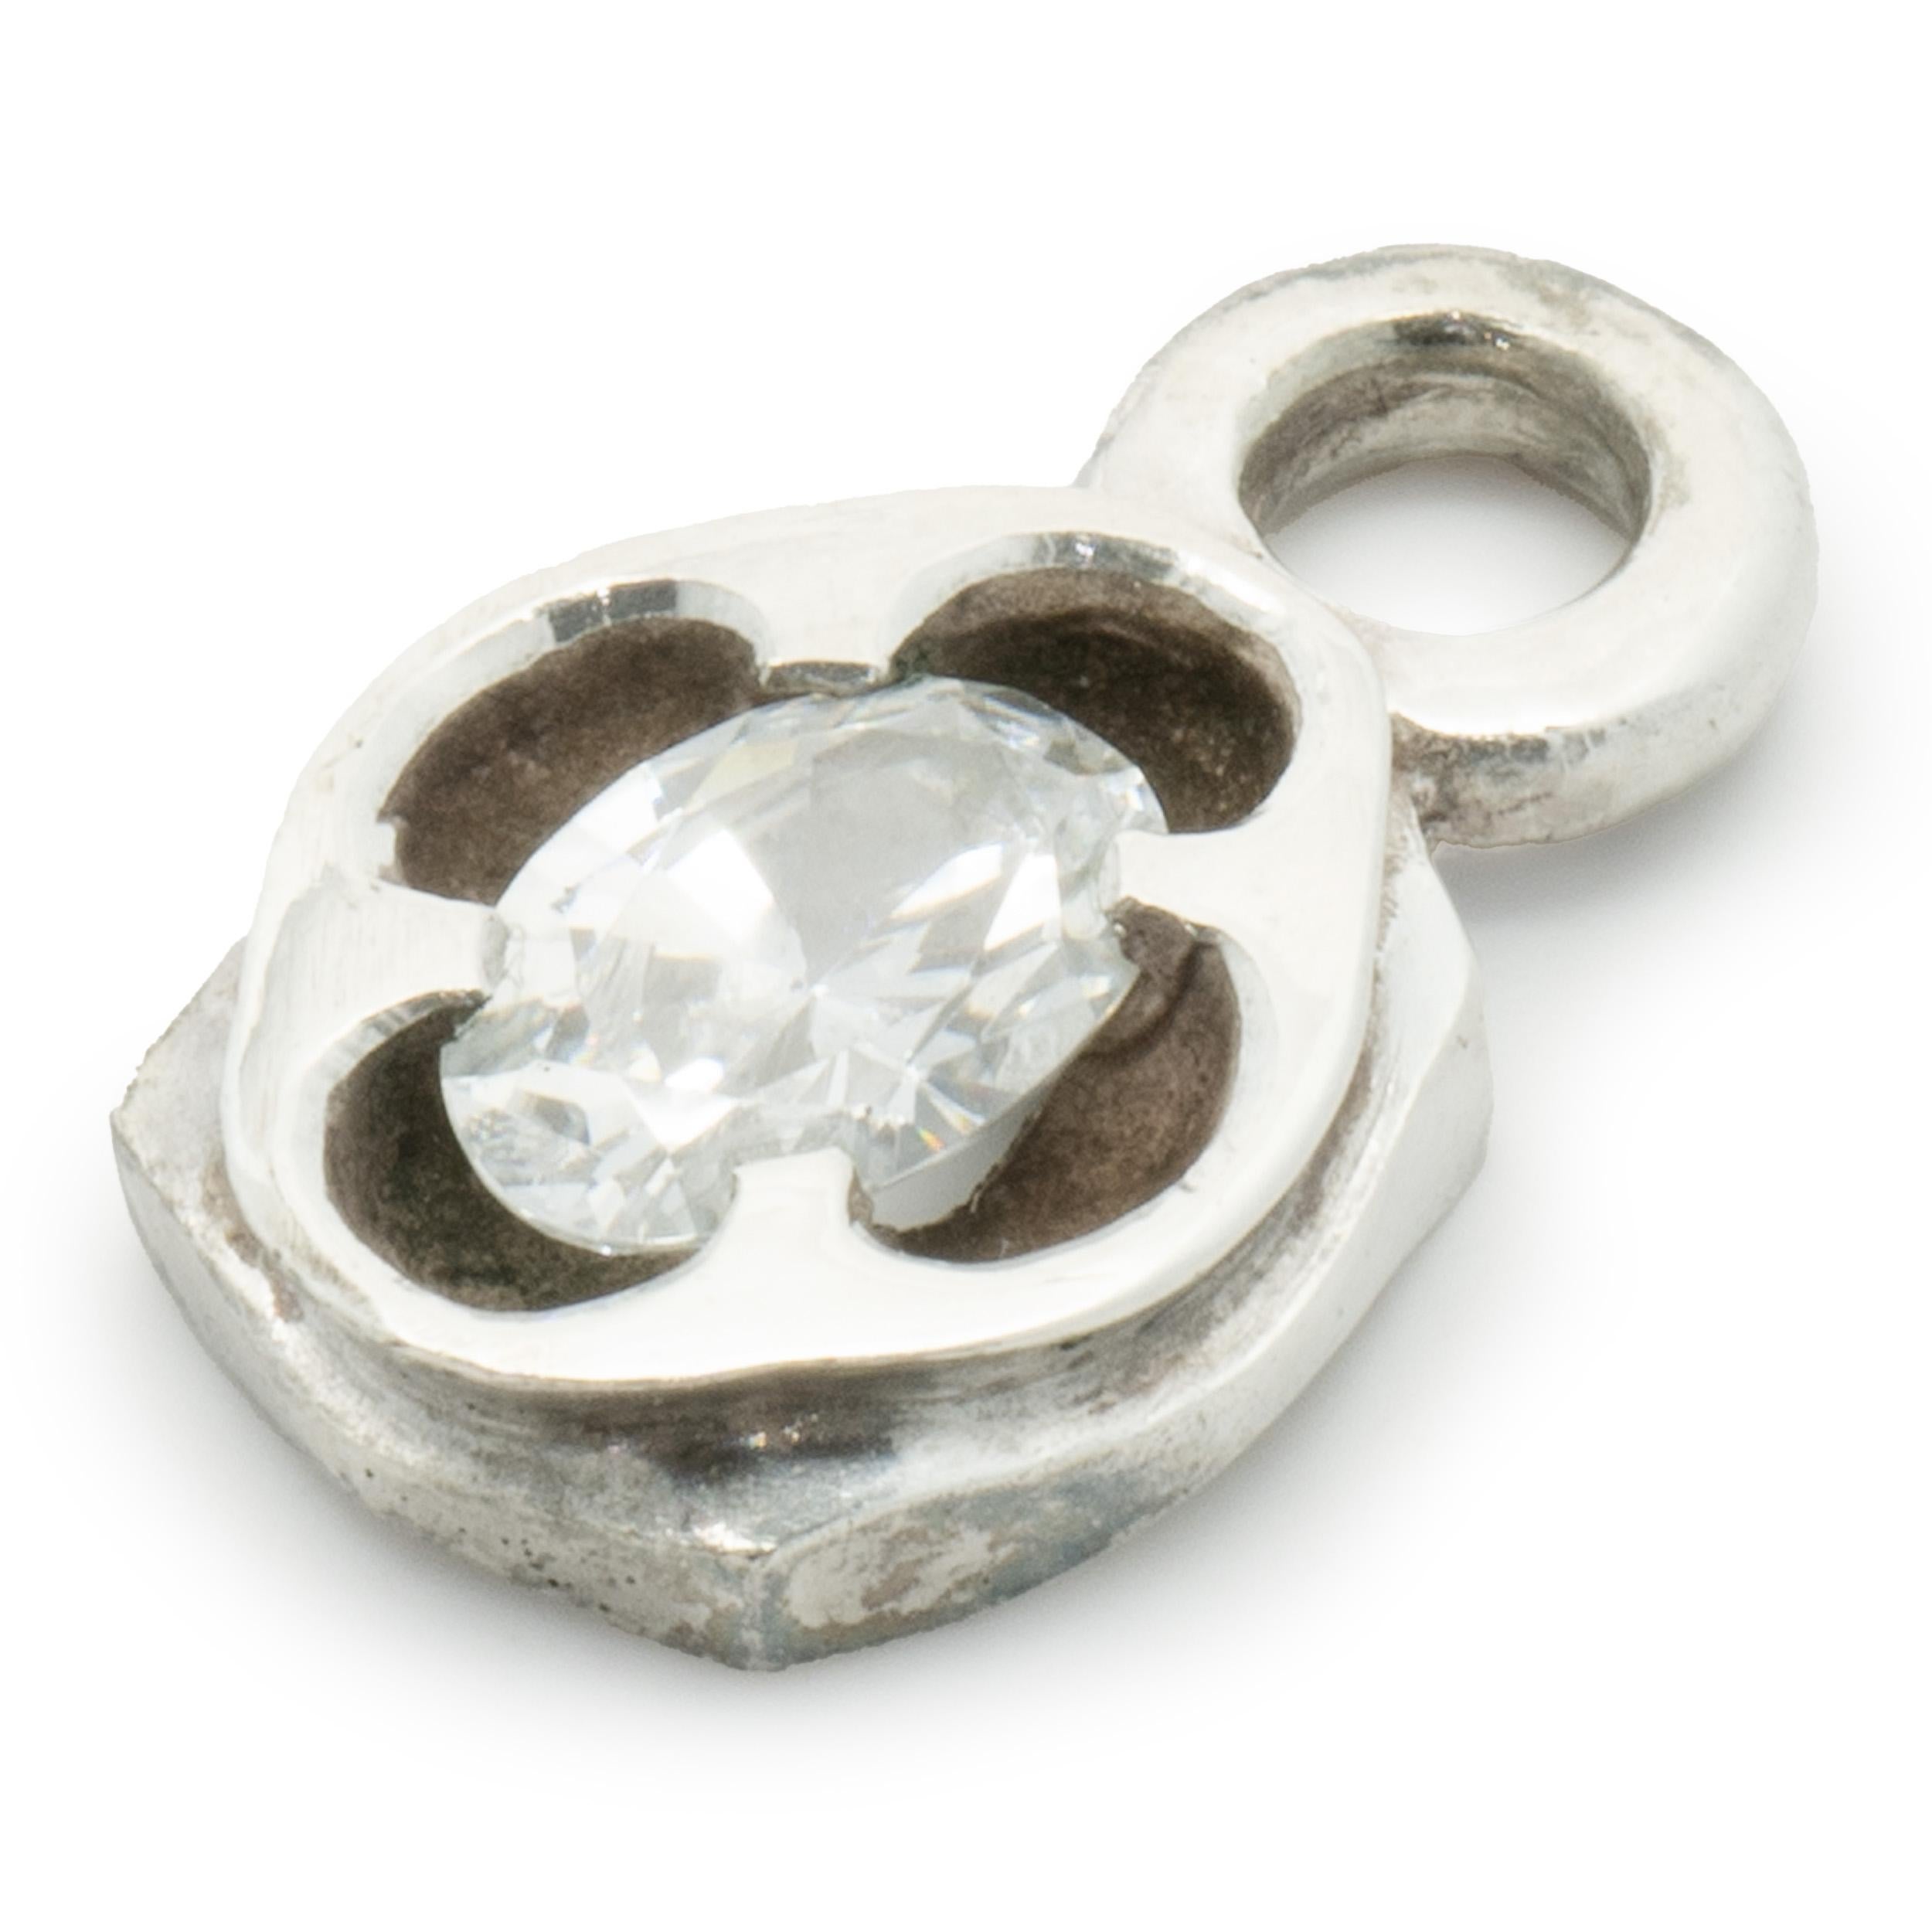 Designer: Lee Brevard
Material: sterling silver
Dimensions: charm measures 14.5mm long
Weight: 1.26 grams